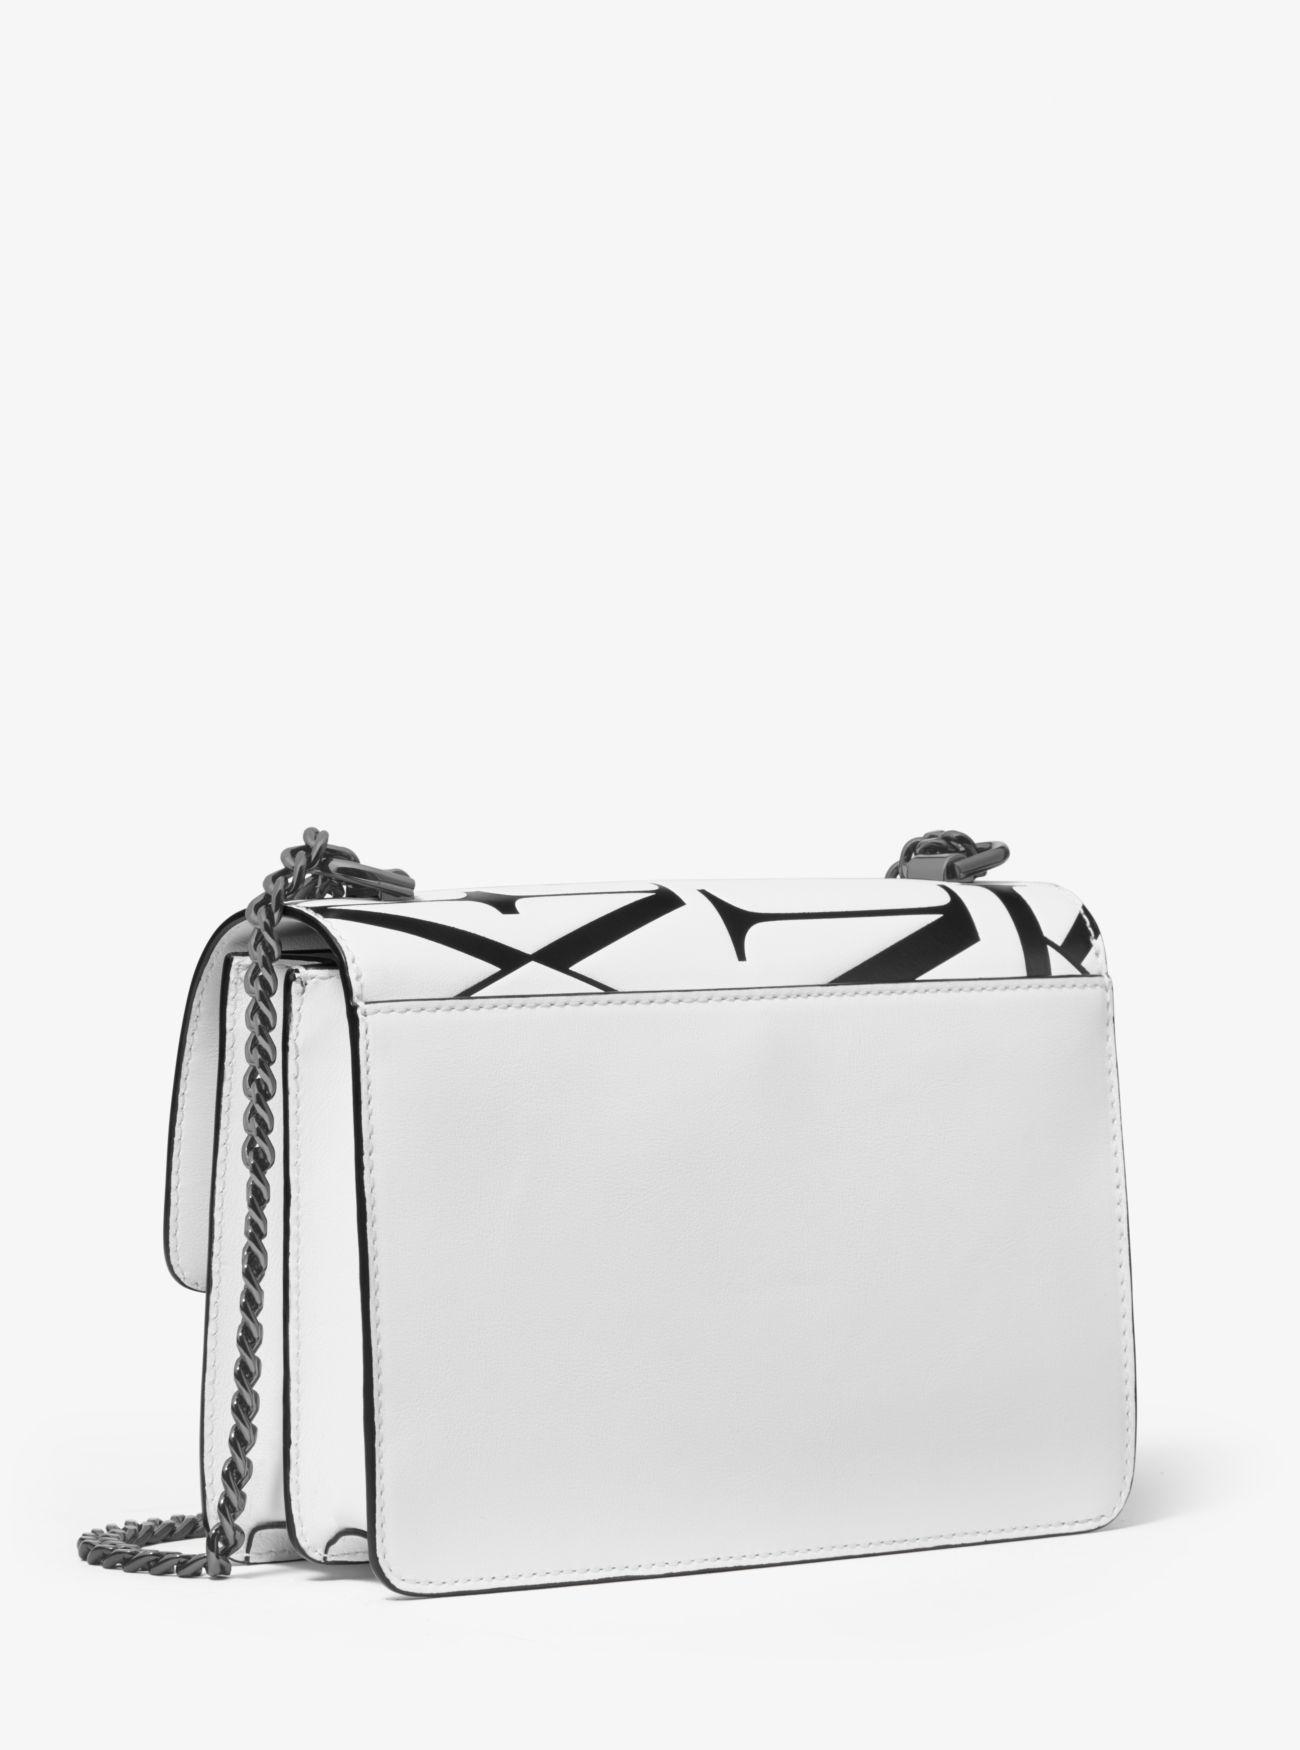 MICHAEL Michael Kors Jade Large Newsprint Logo Leather Crossbody Bag in Black (White) - Lyst